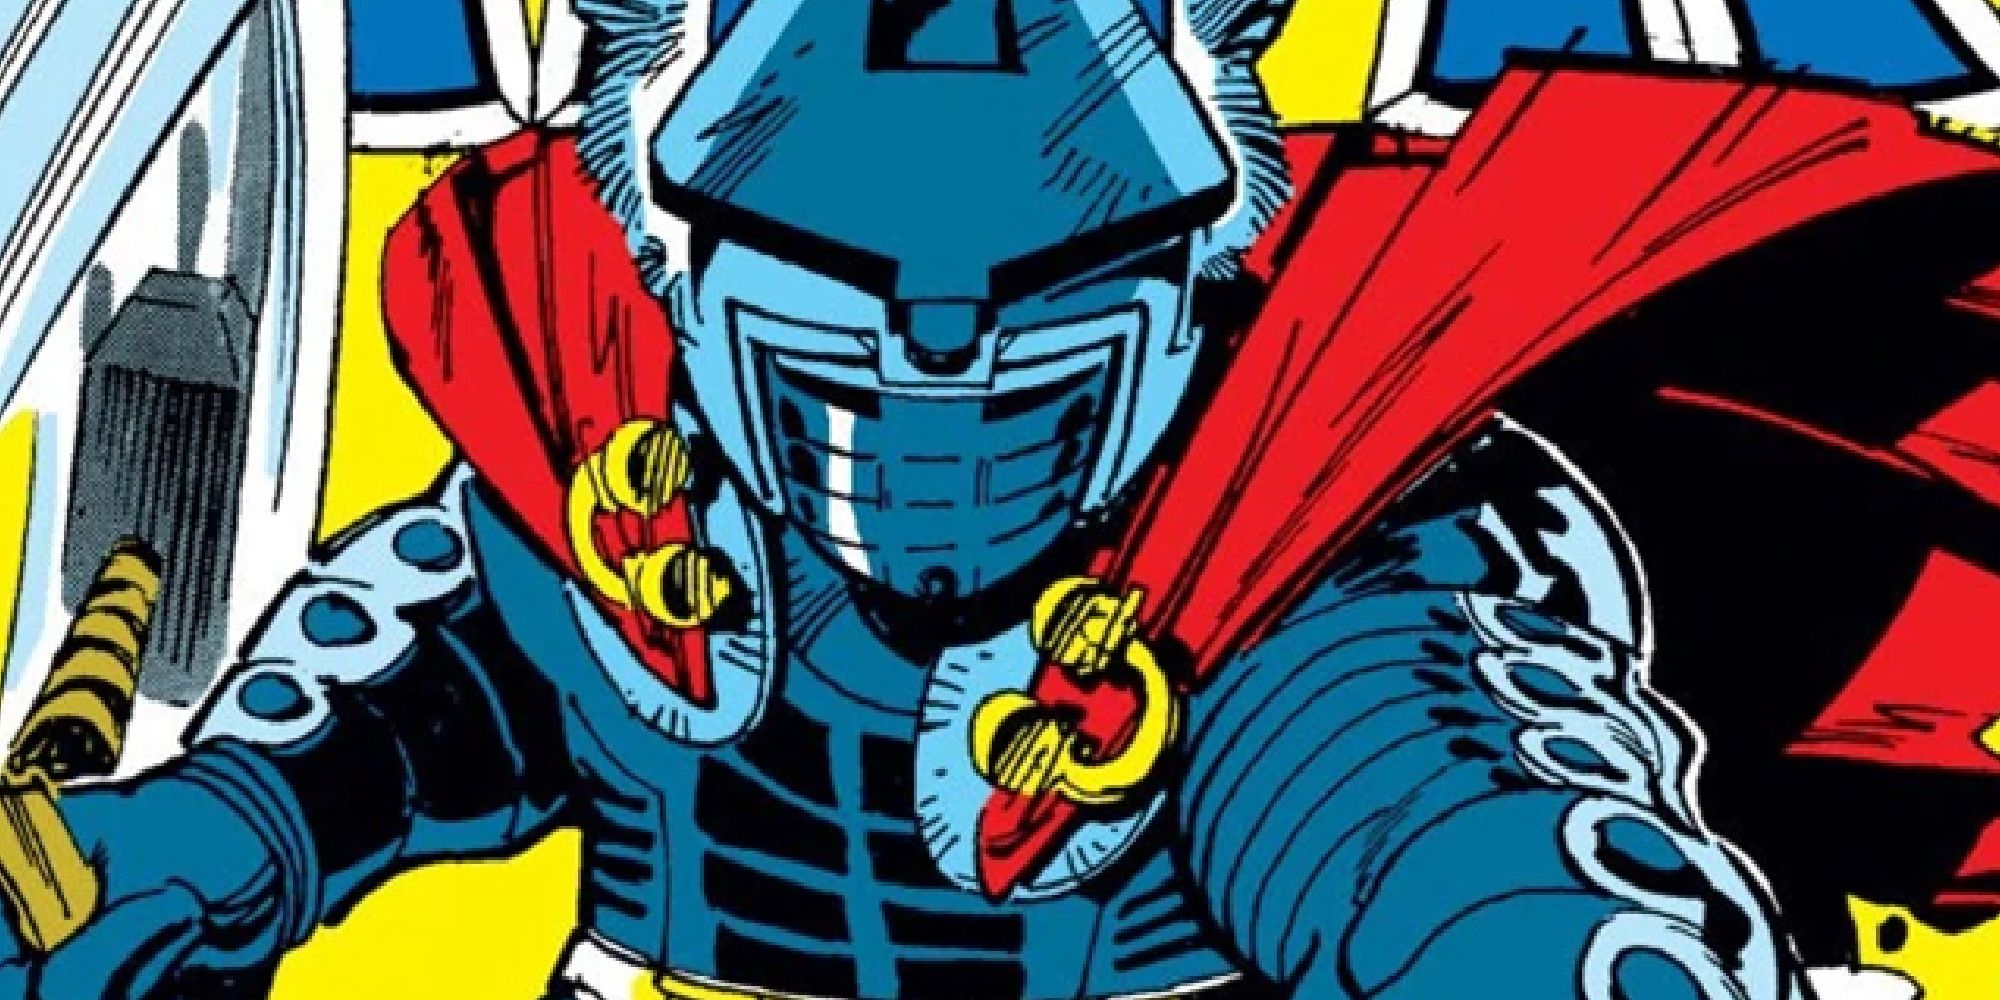 Destroyer Thor attacks in Marvel Comics.